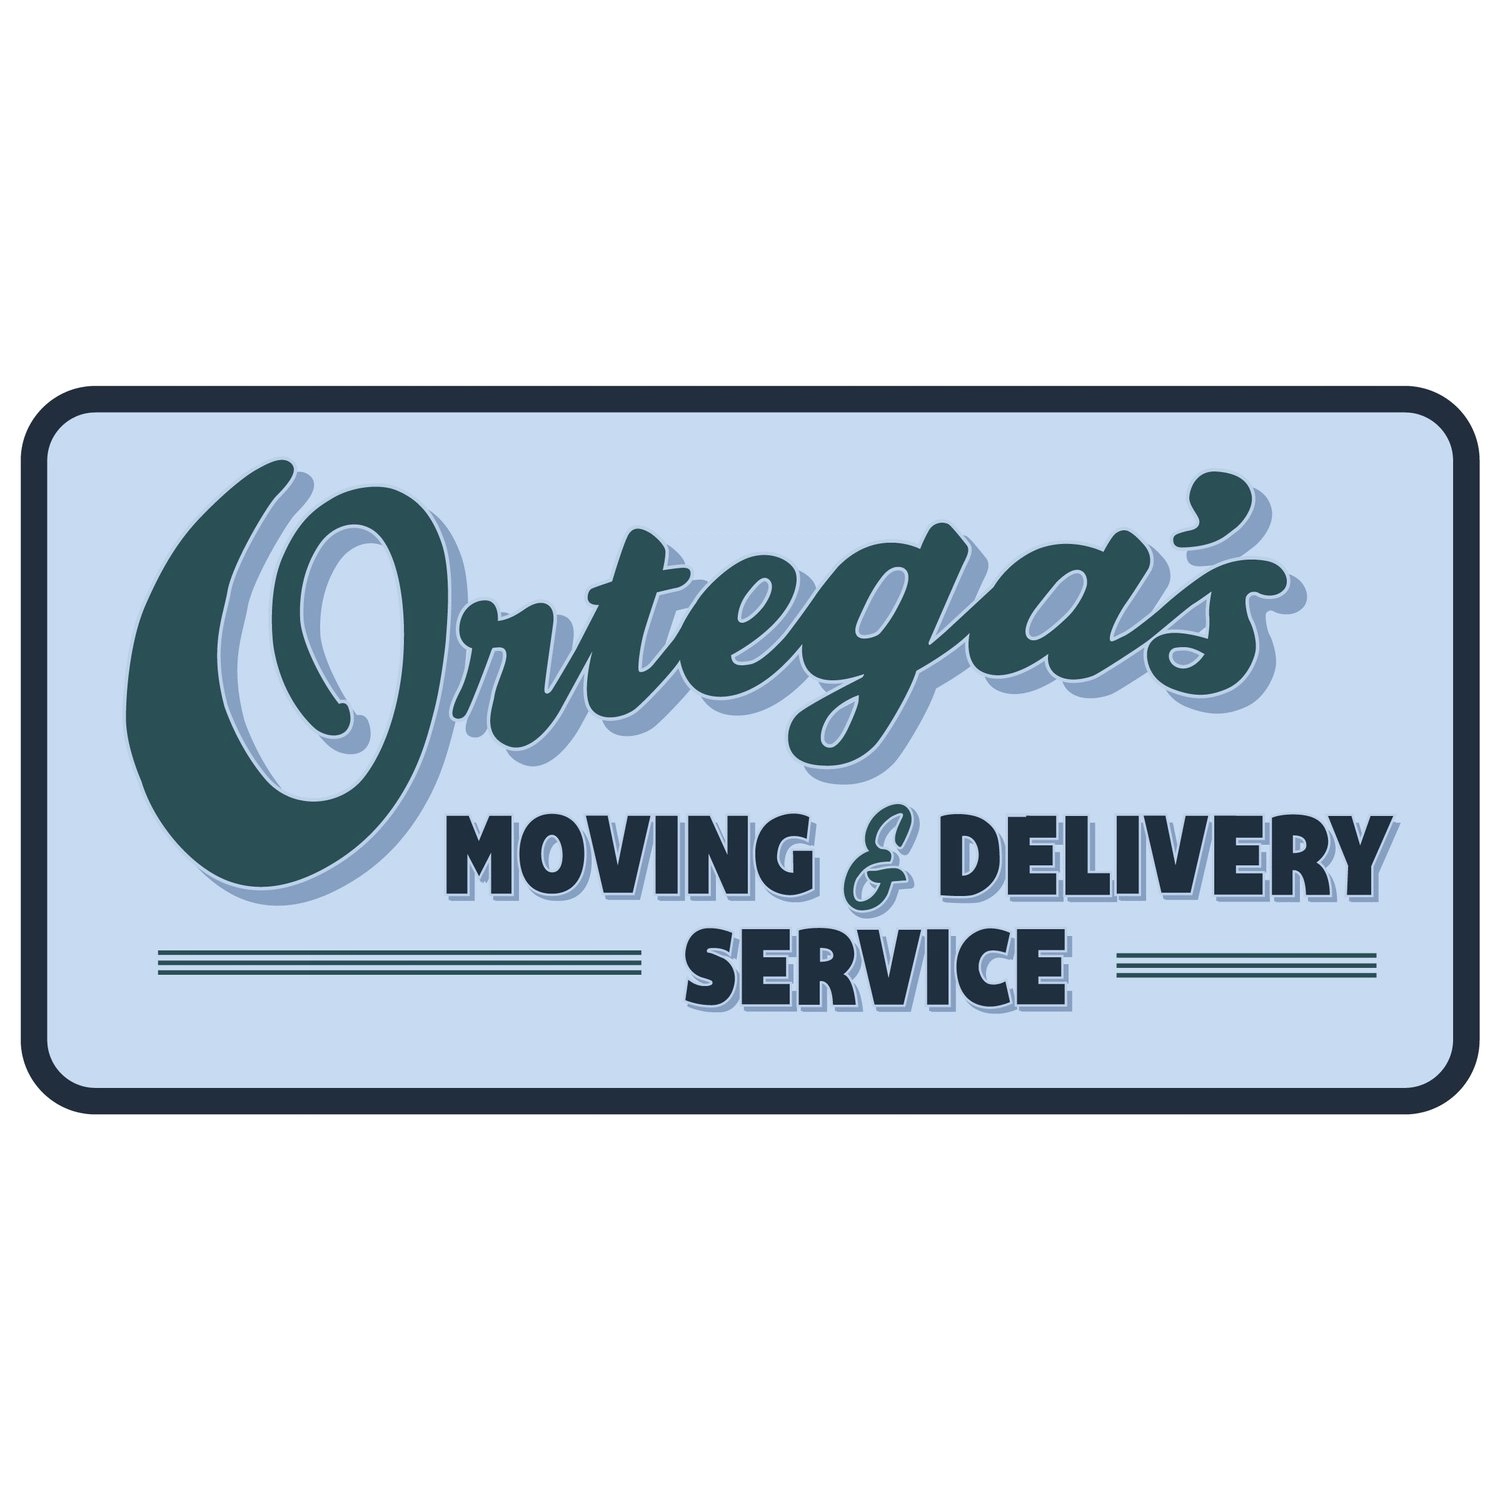 Ortega's Moving & Delivery Service Logo